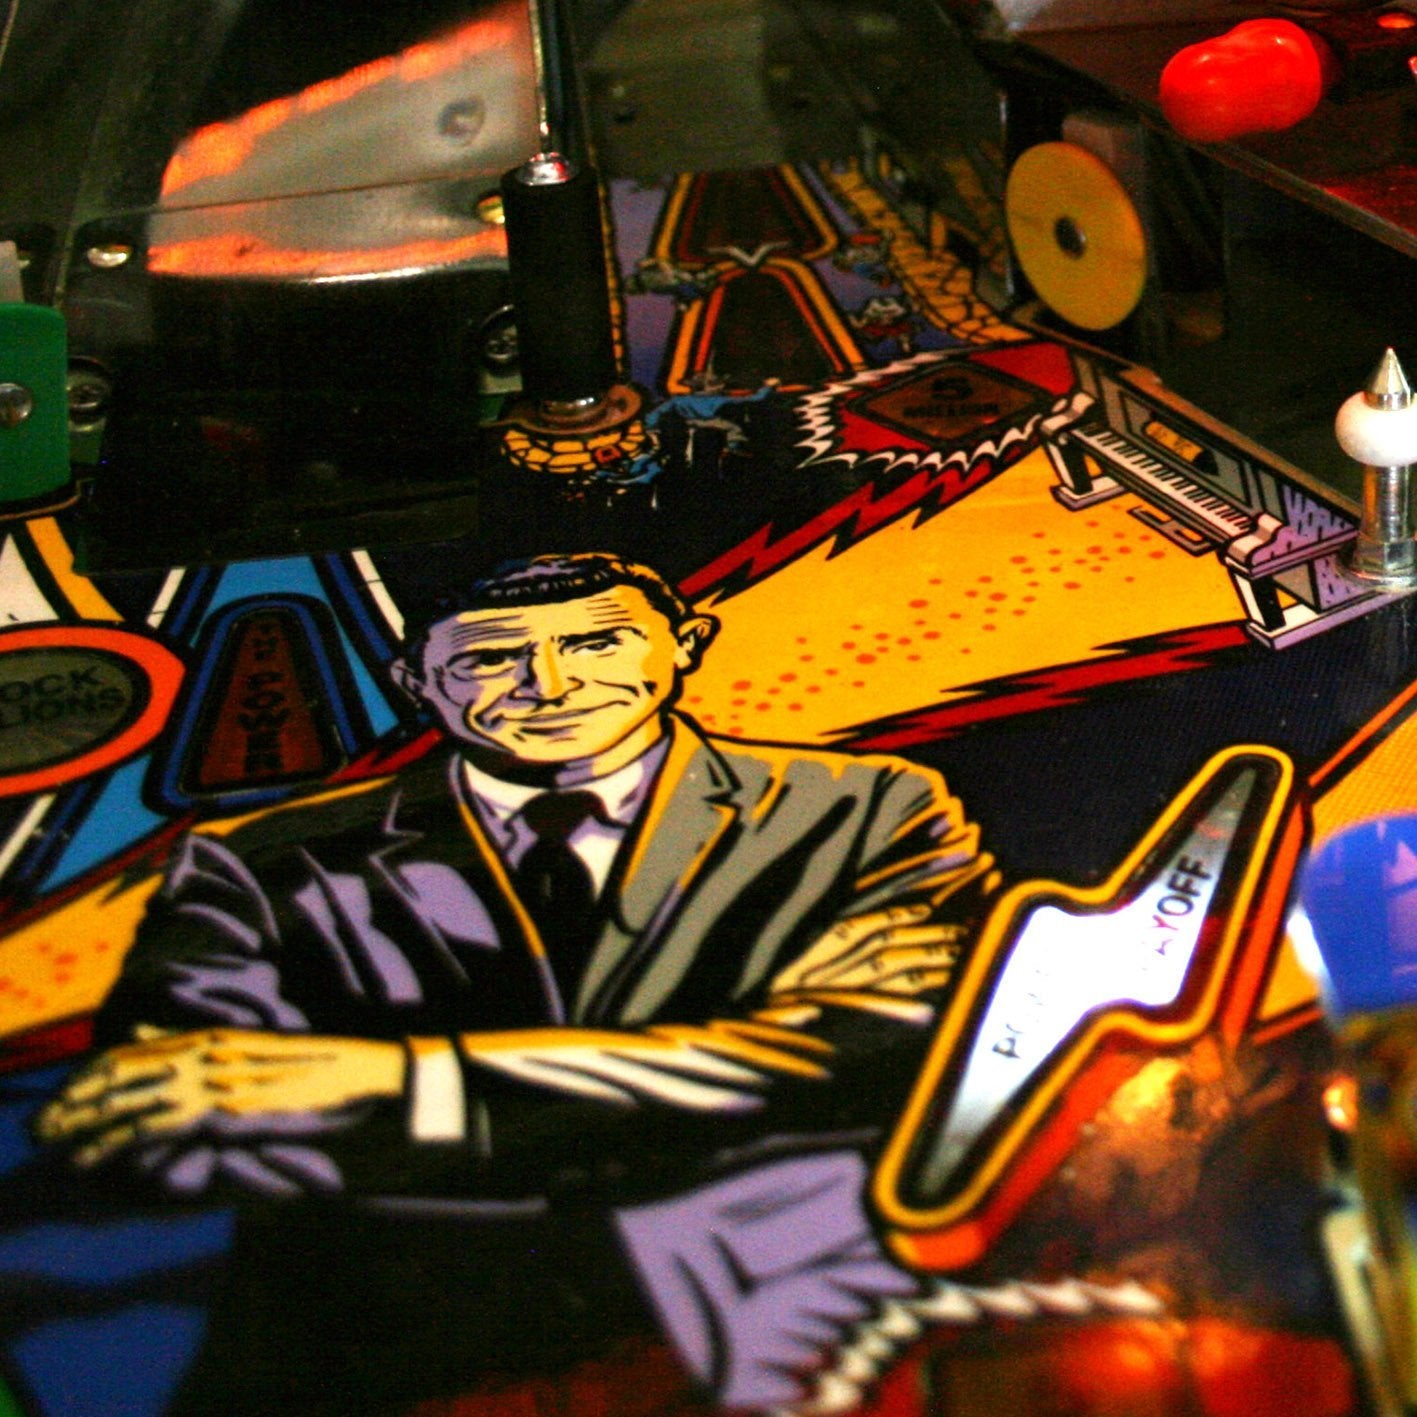 1993 Twilight Zone Pinball Machine by Bally